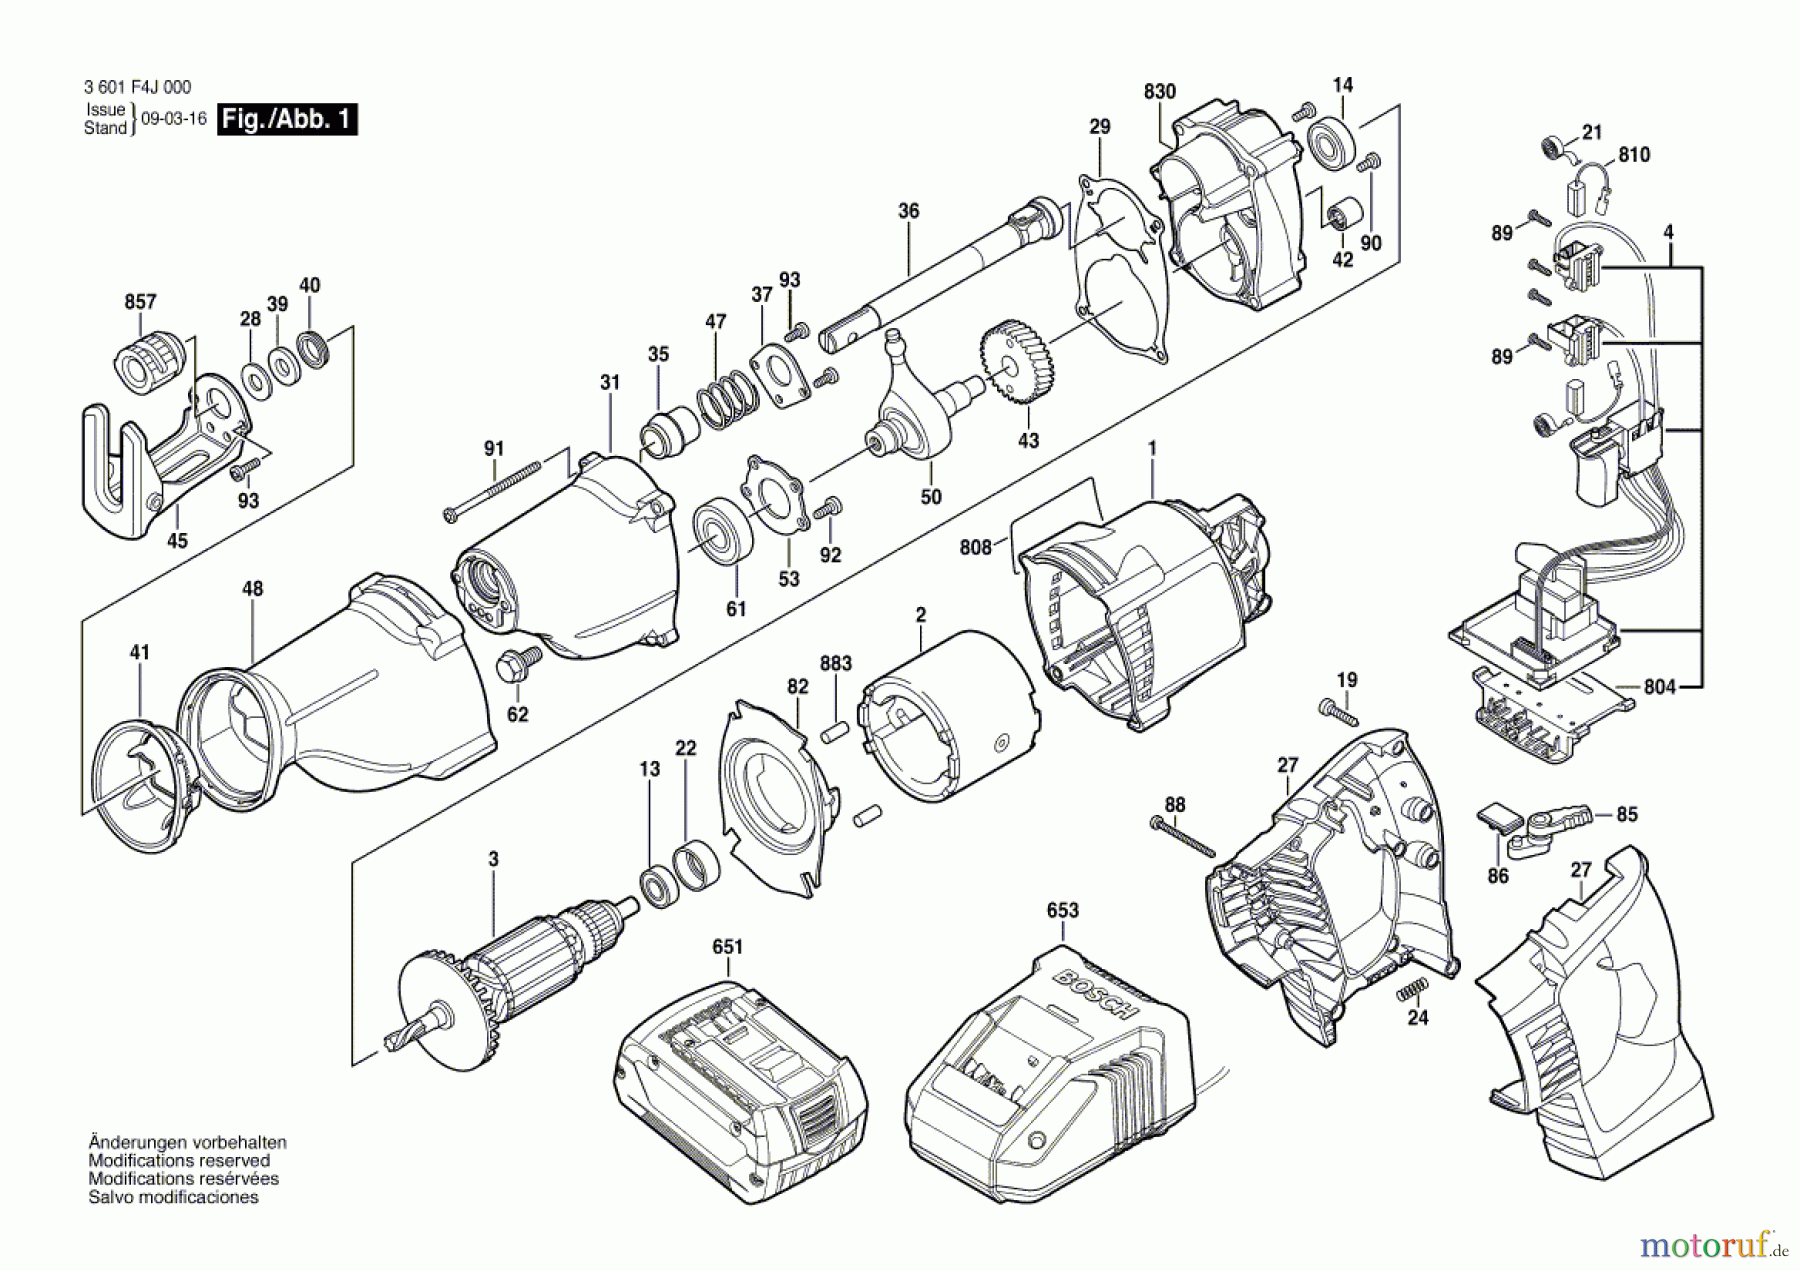  Bosch Akku Werkzeug Akku-Säbelsäge GSA 18 V-LI Seite 1